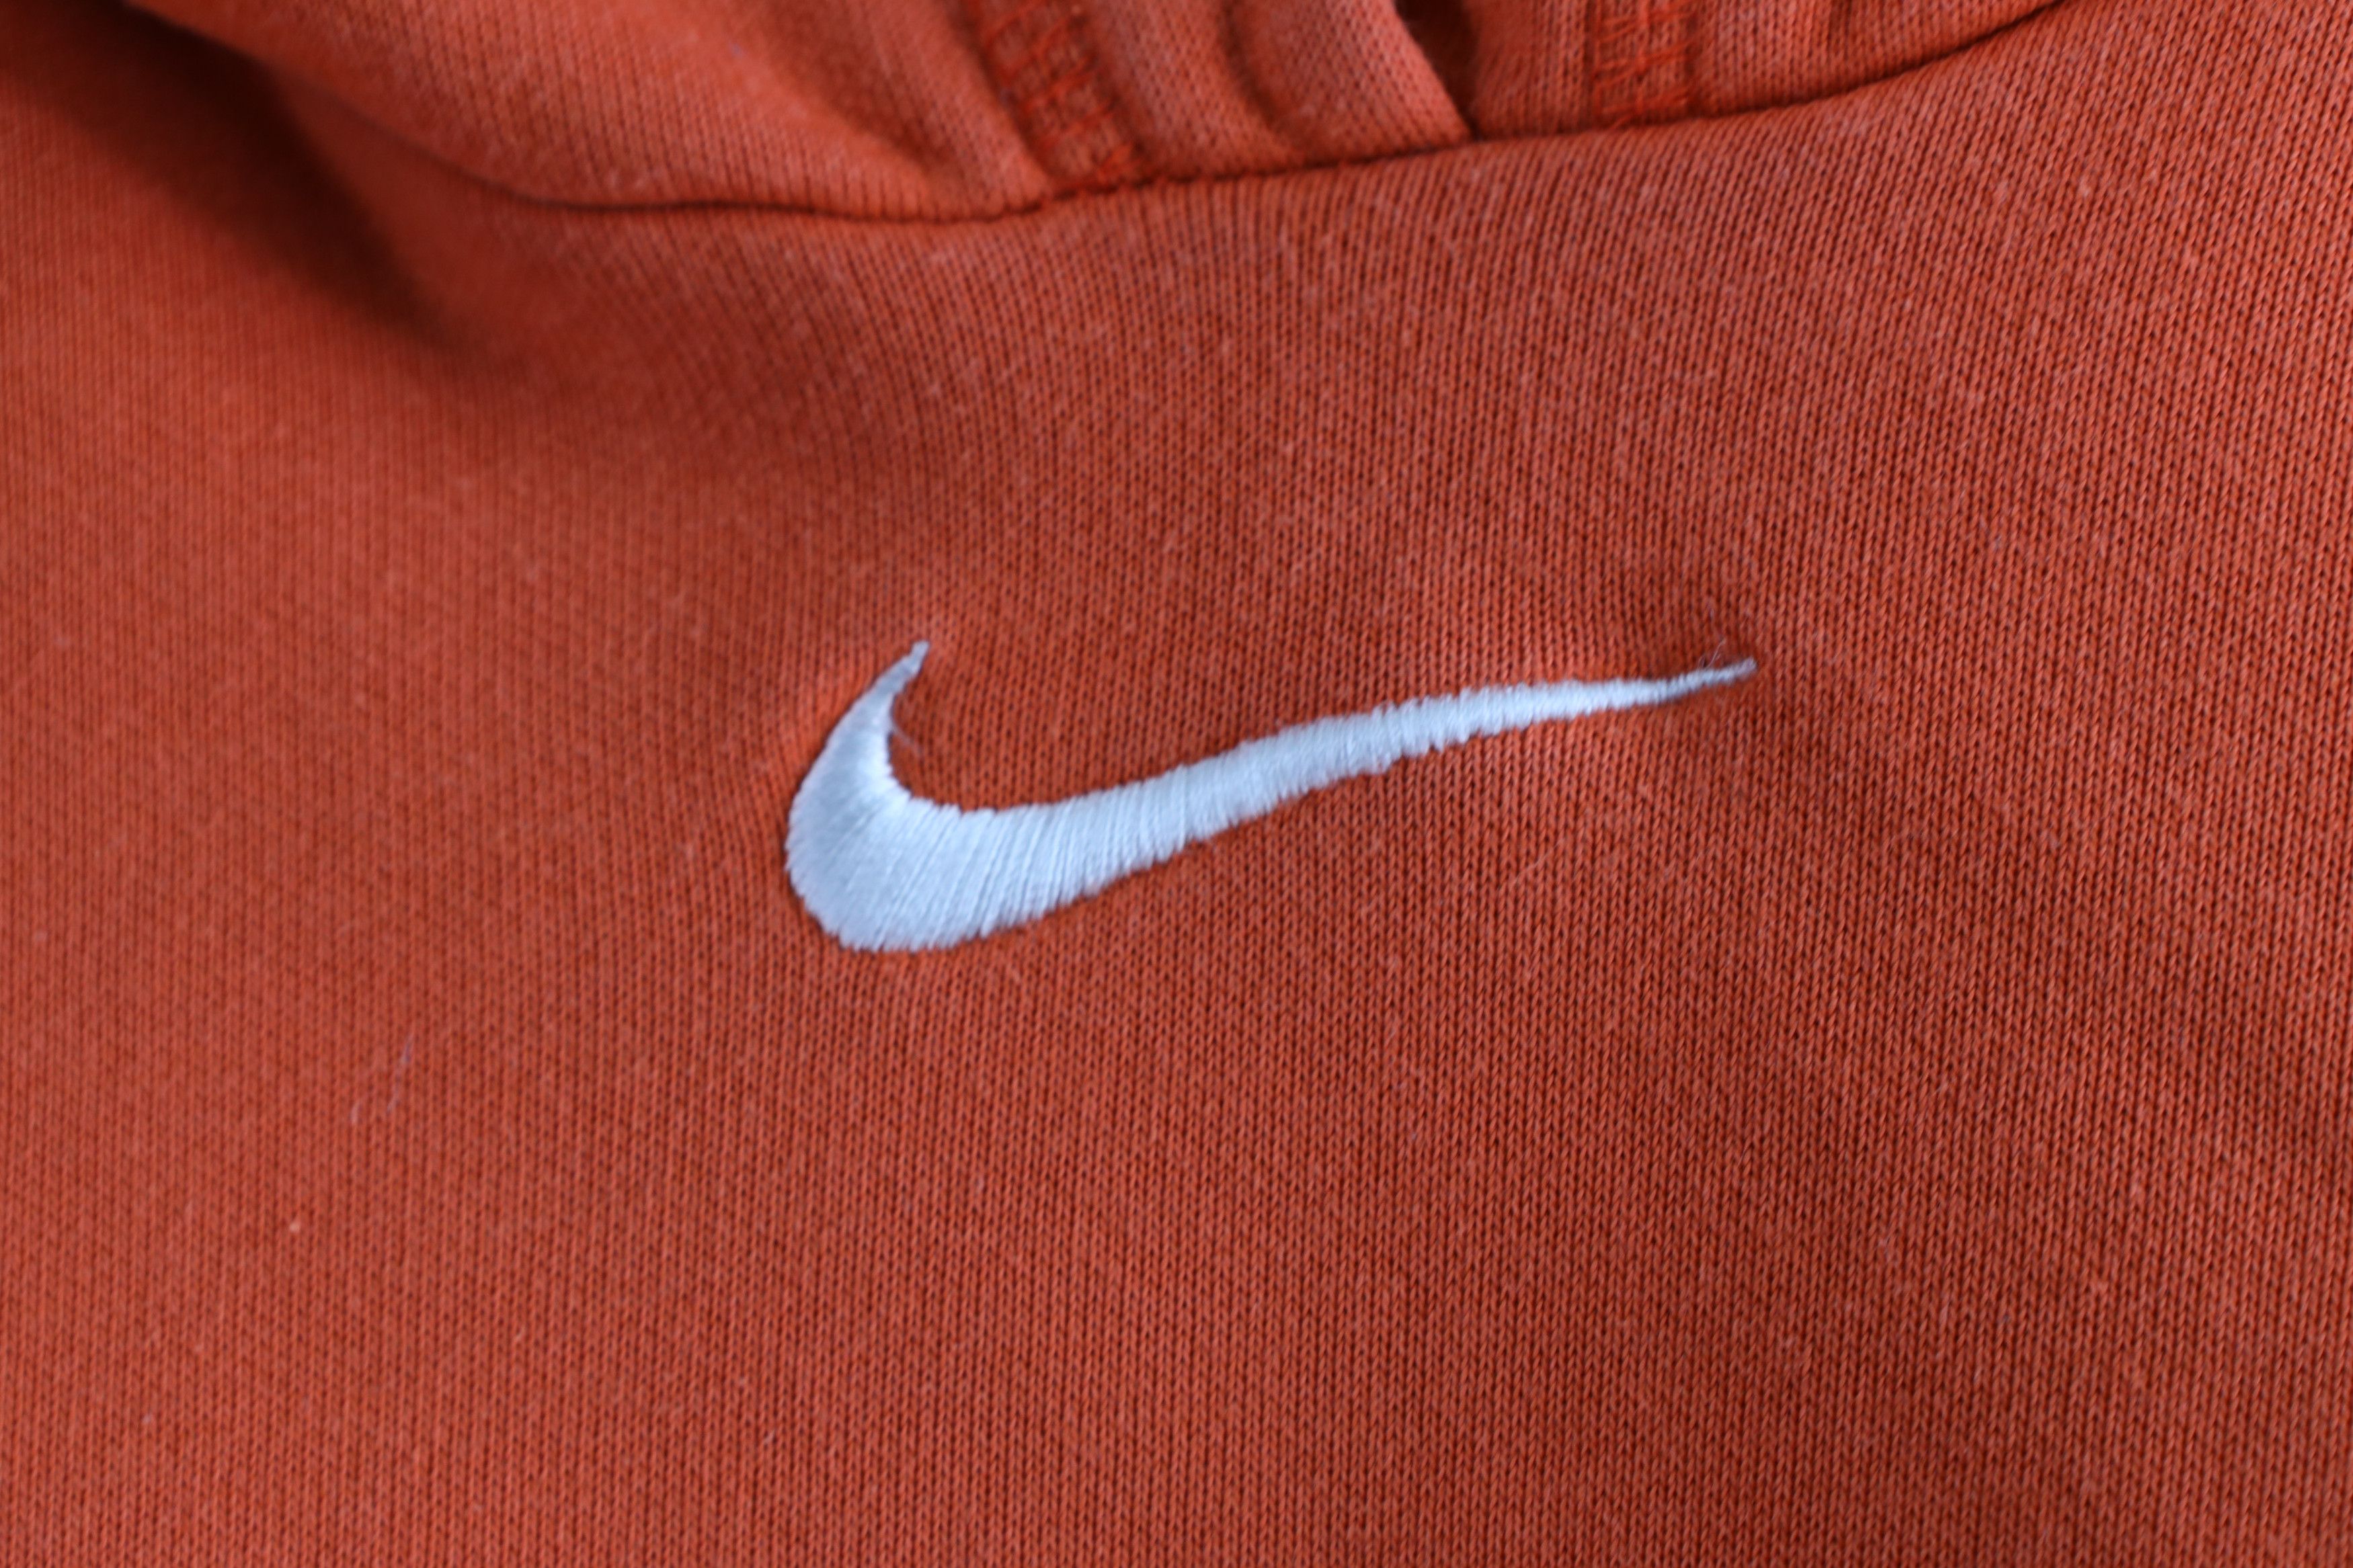 Nike Vintage Nike Travis Scott Swoosh Hoodie Sweatshirt Orange Size S / US 4 / IT 40 - 4 Thumbnail